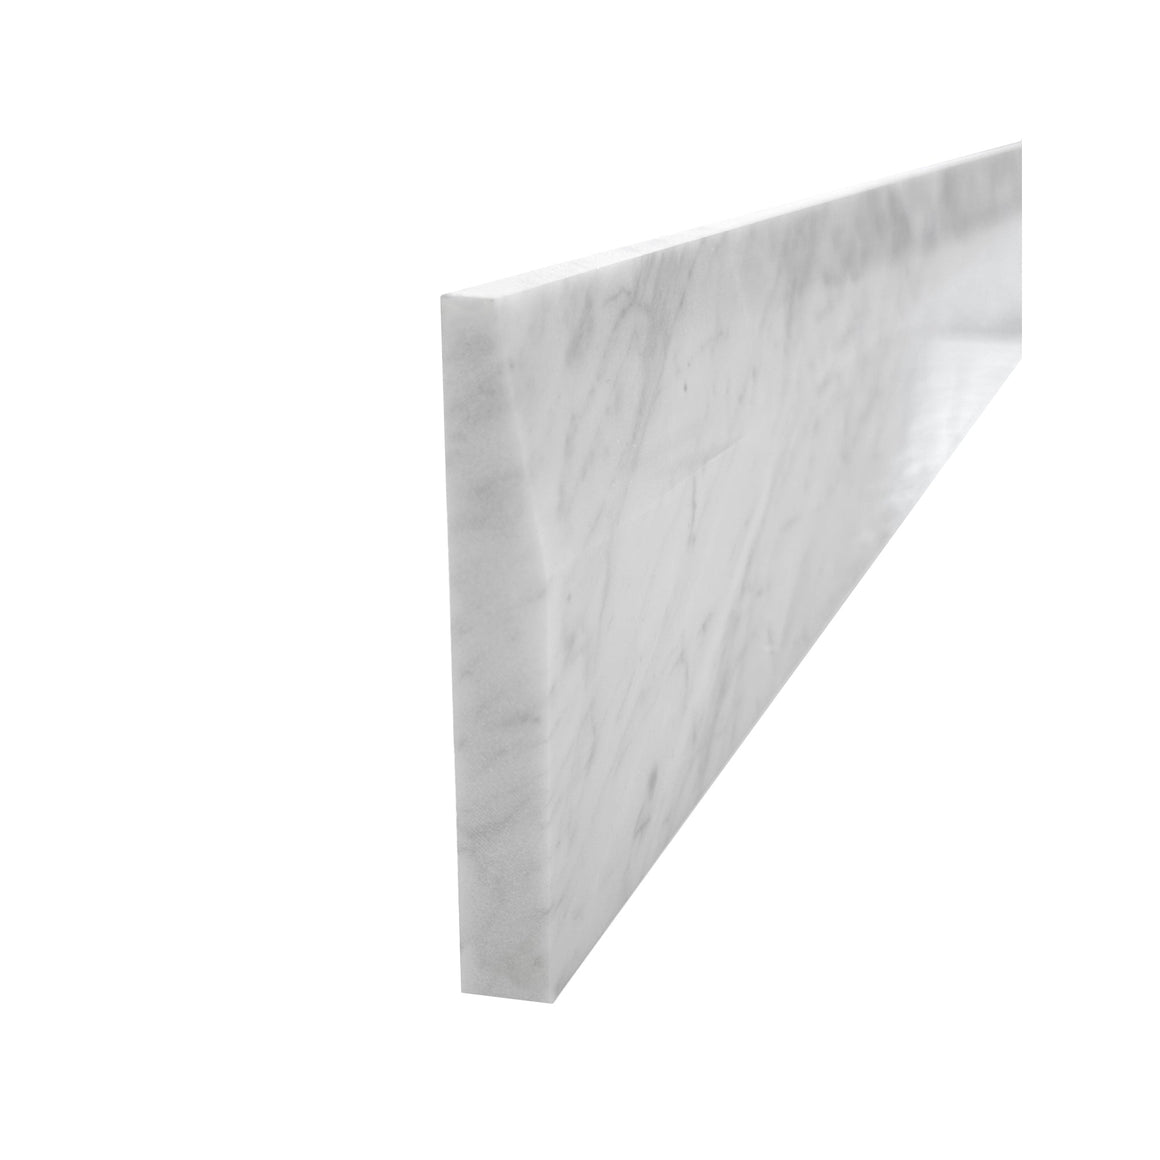 Custom Length Cut From 6x60 White Carrara Marble Thresholds Door Saddles Window Sills Shower Curbs Single Hollywood Bevel Polished